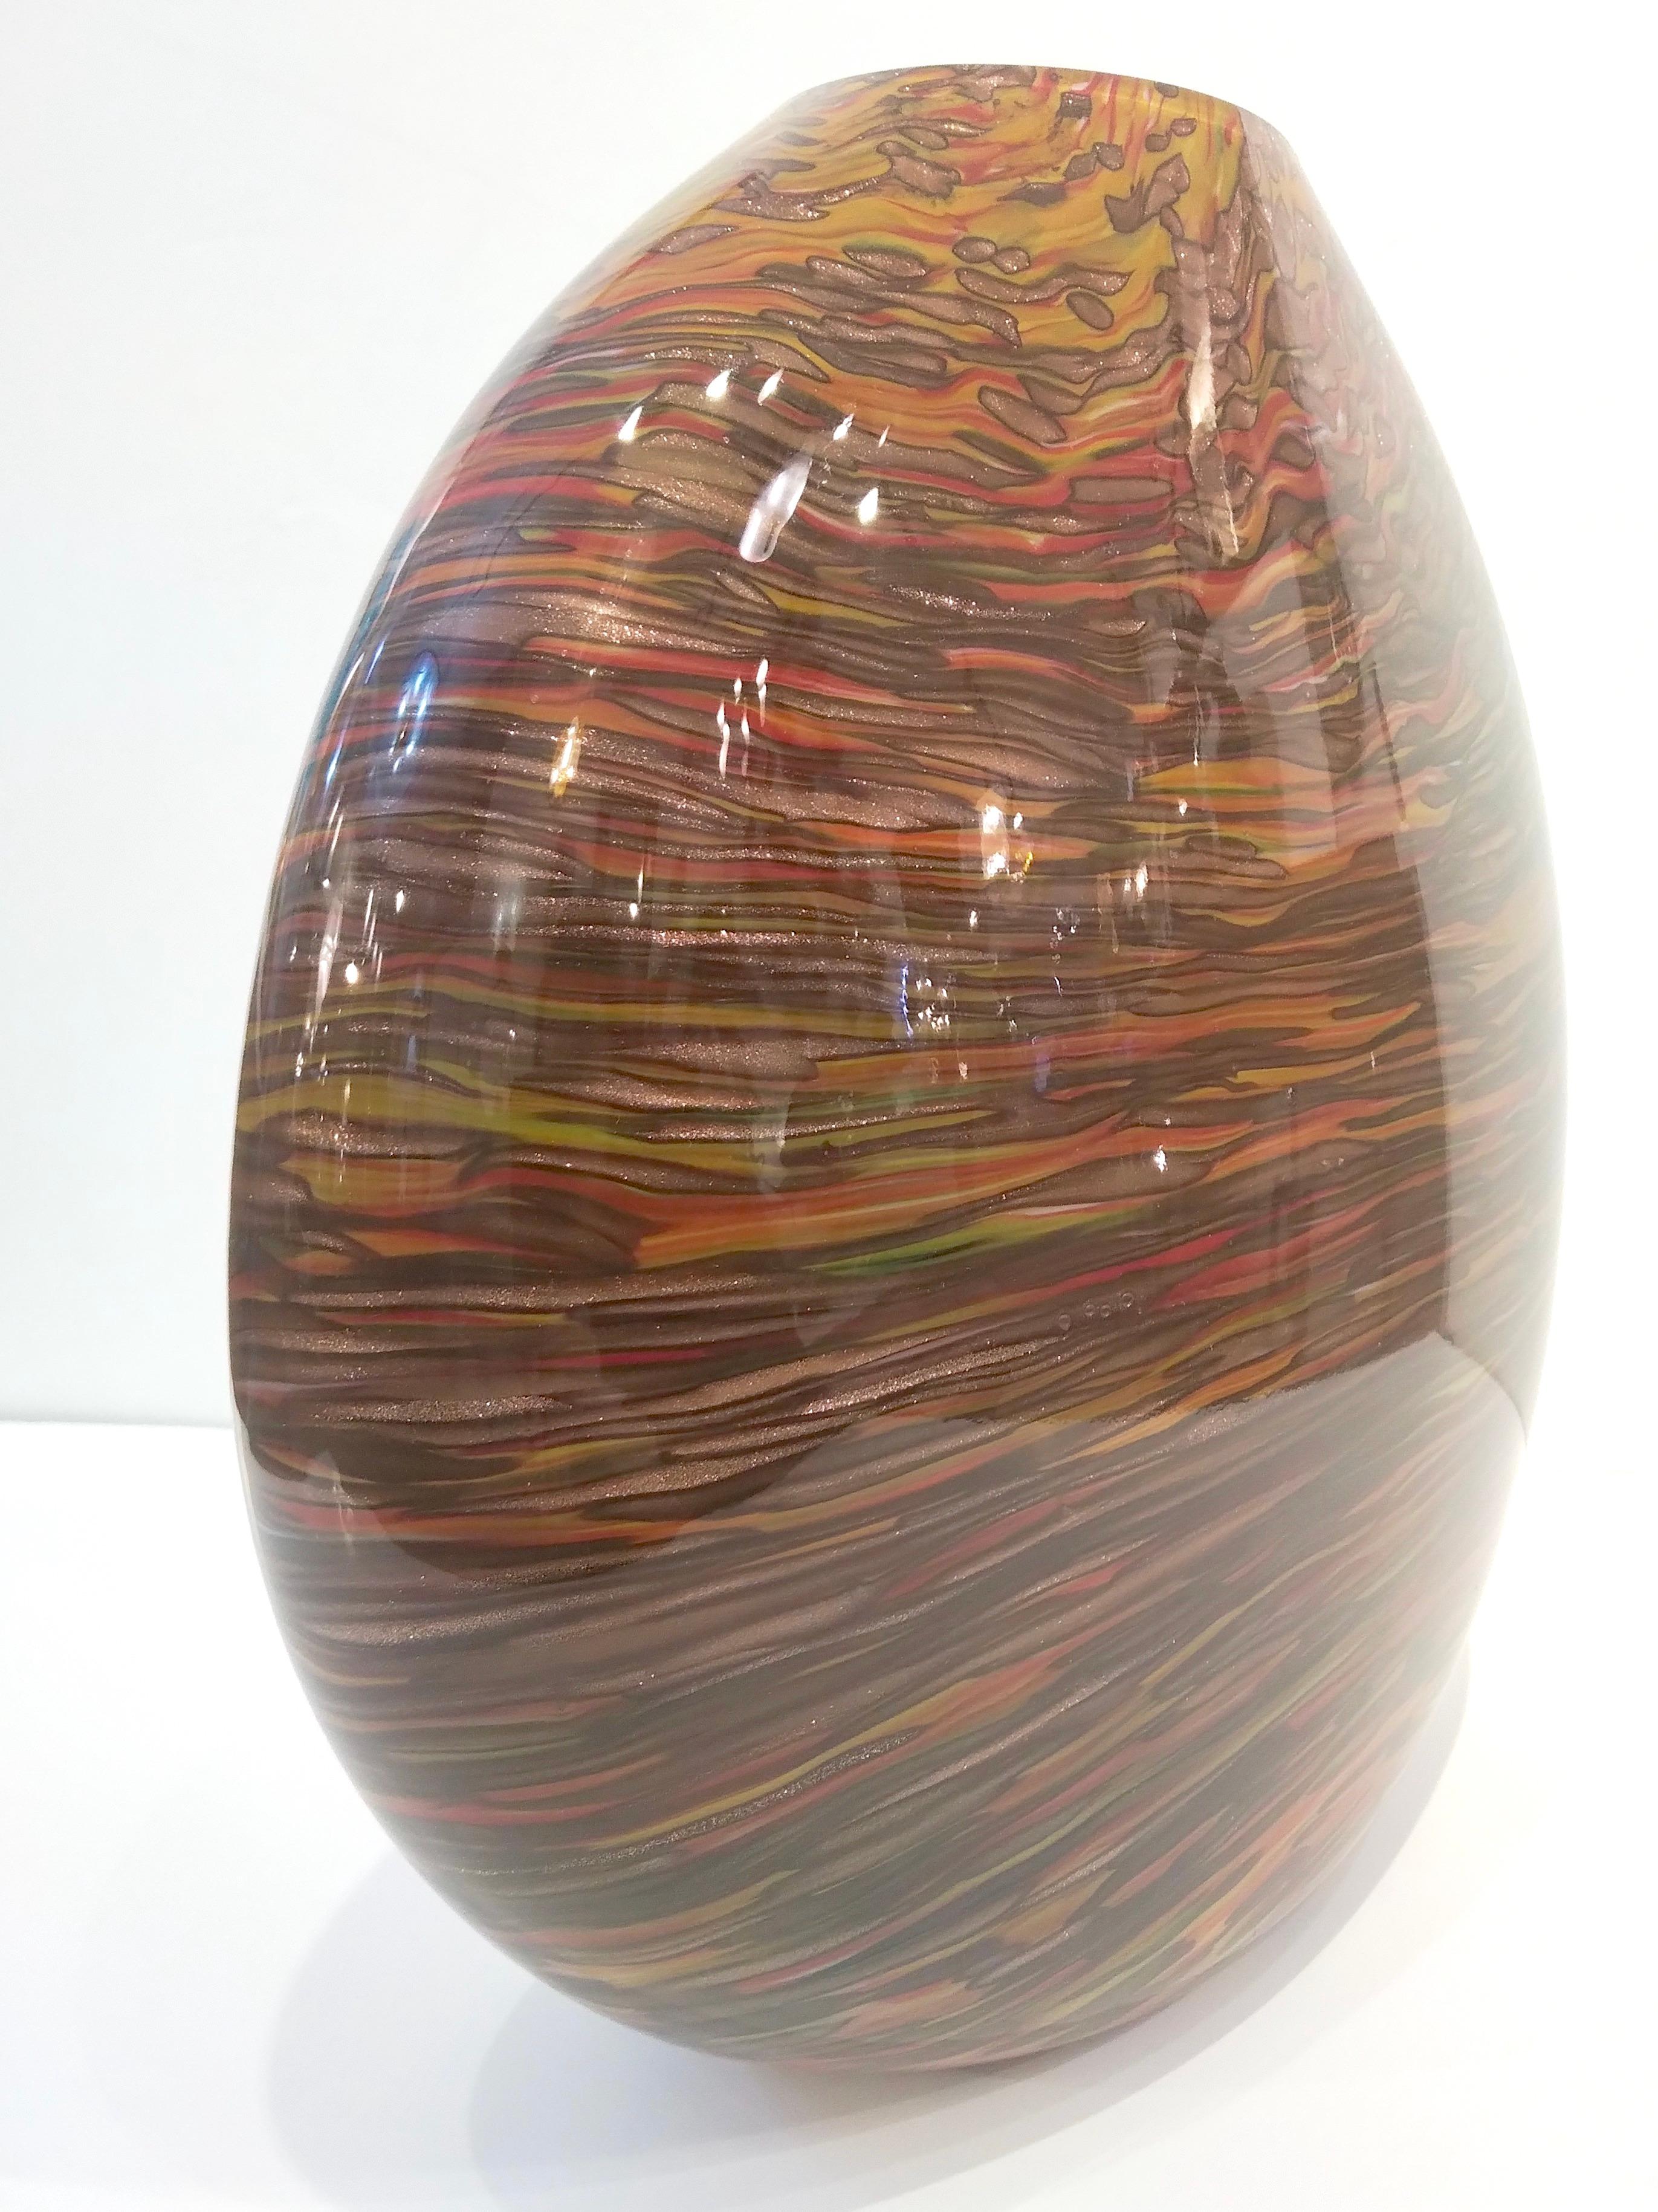 Italian Formia 1980s Modern Elliptical Brown Yellow Red Orange Gold Murano Glass Vase For Sale